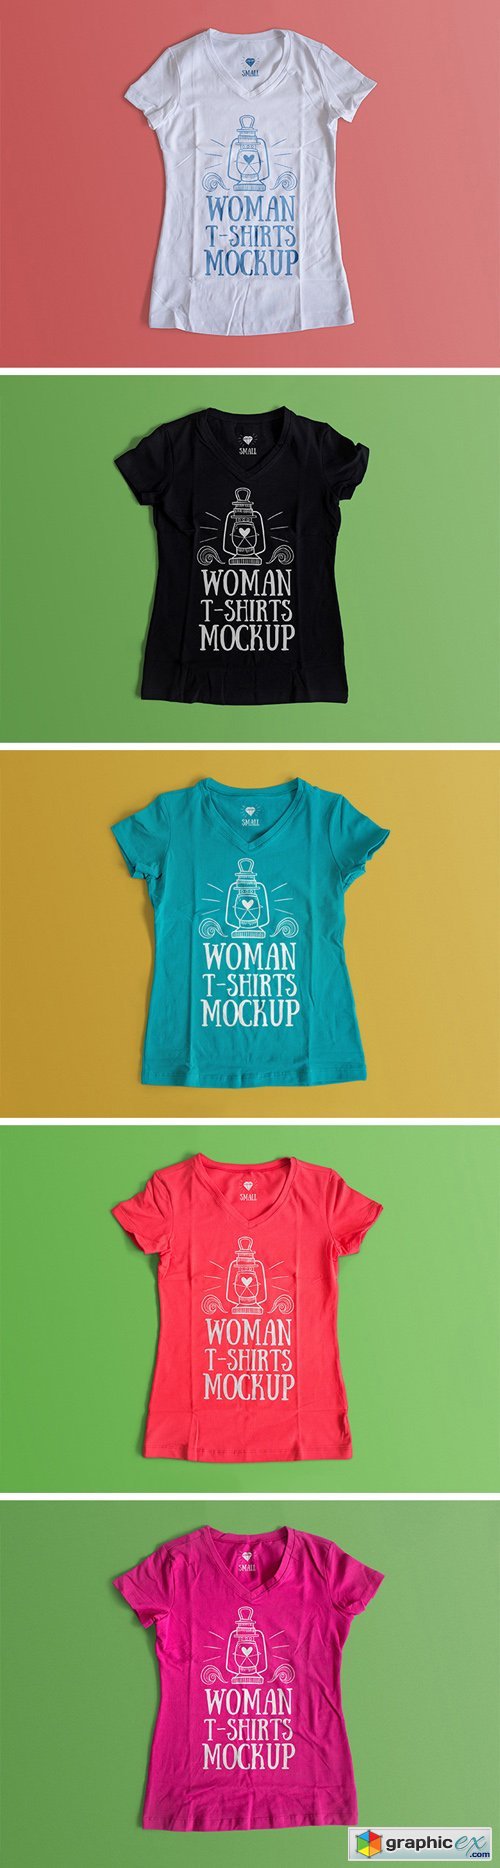 Woman T-Shirt Mockup Psd